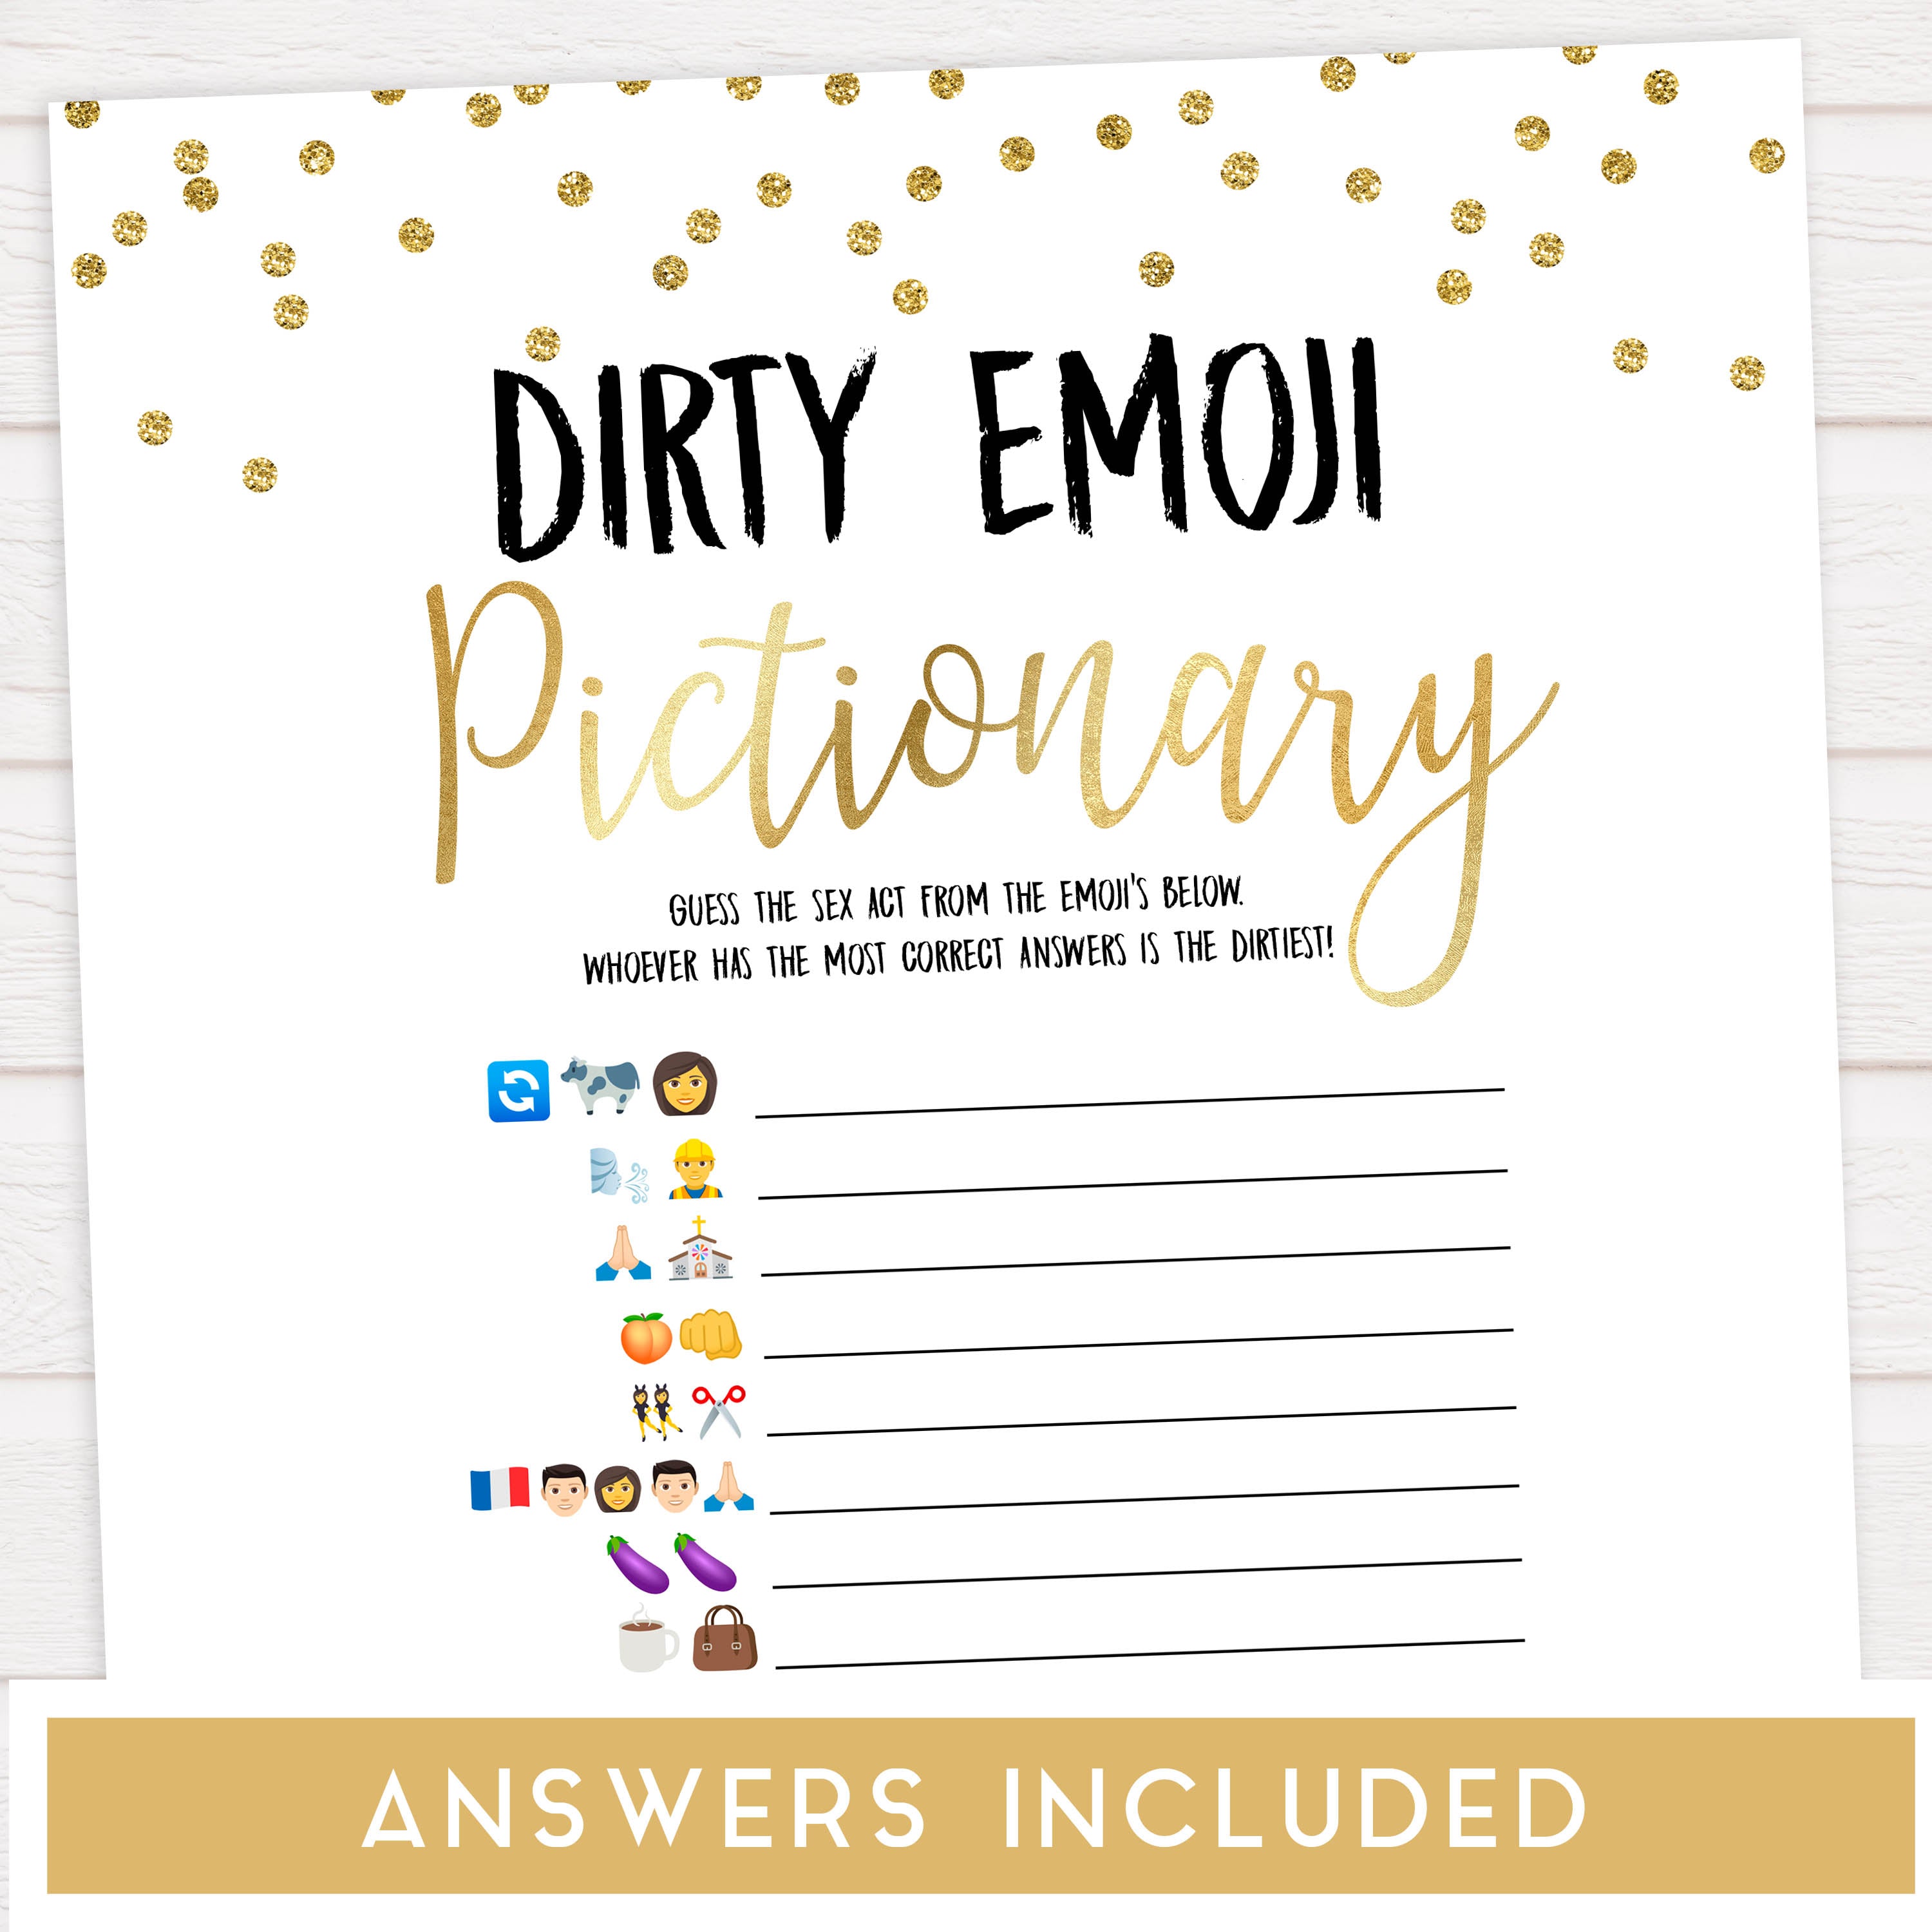 dirty emoji pictionary game, printable bachelorette games, adult birthday games, dirty emoji game,